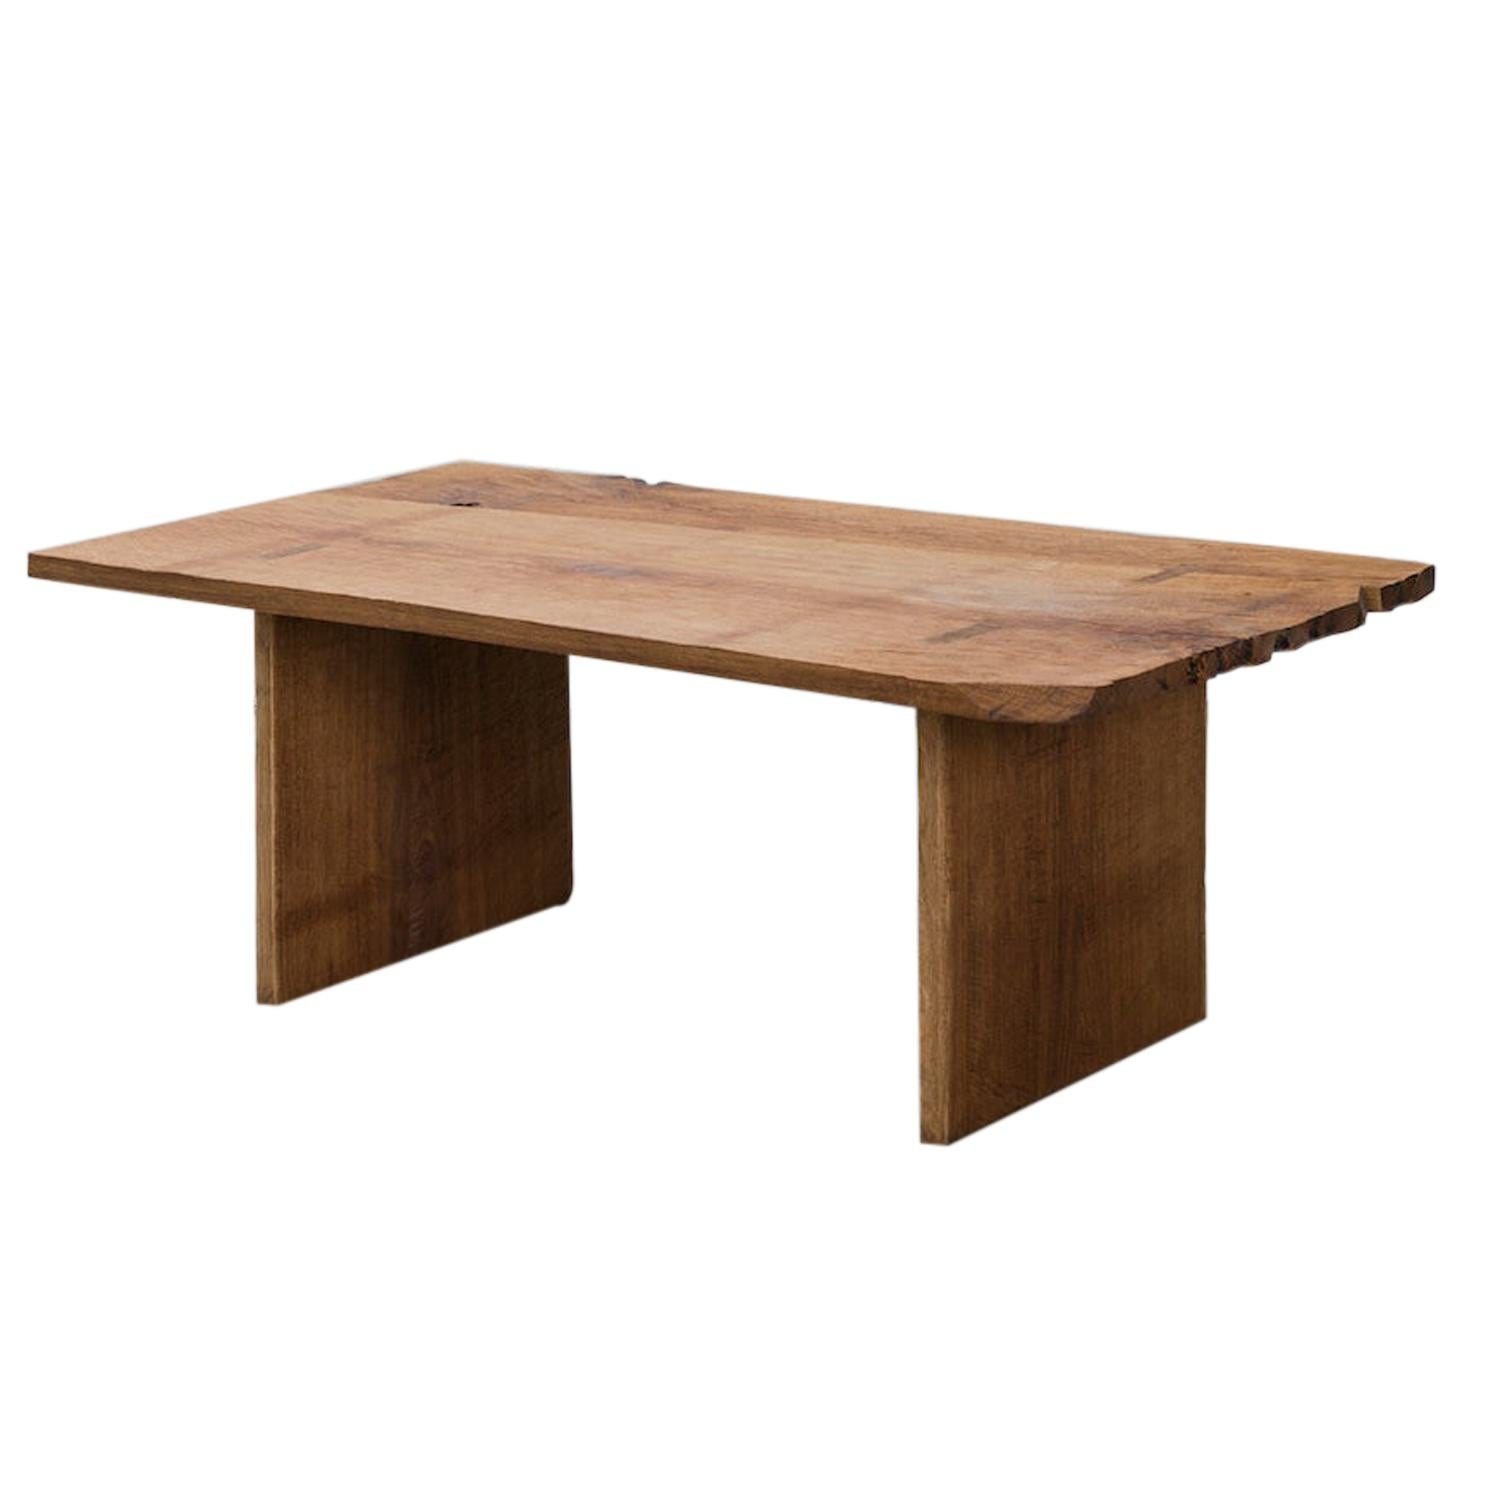 Custom Sculpted Coffee Table in Solid Oakwood, Square & Dark Wood